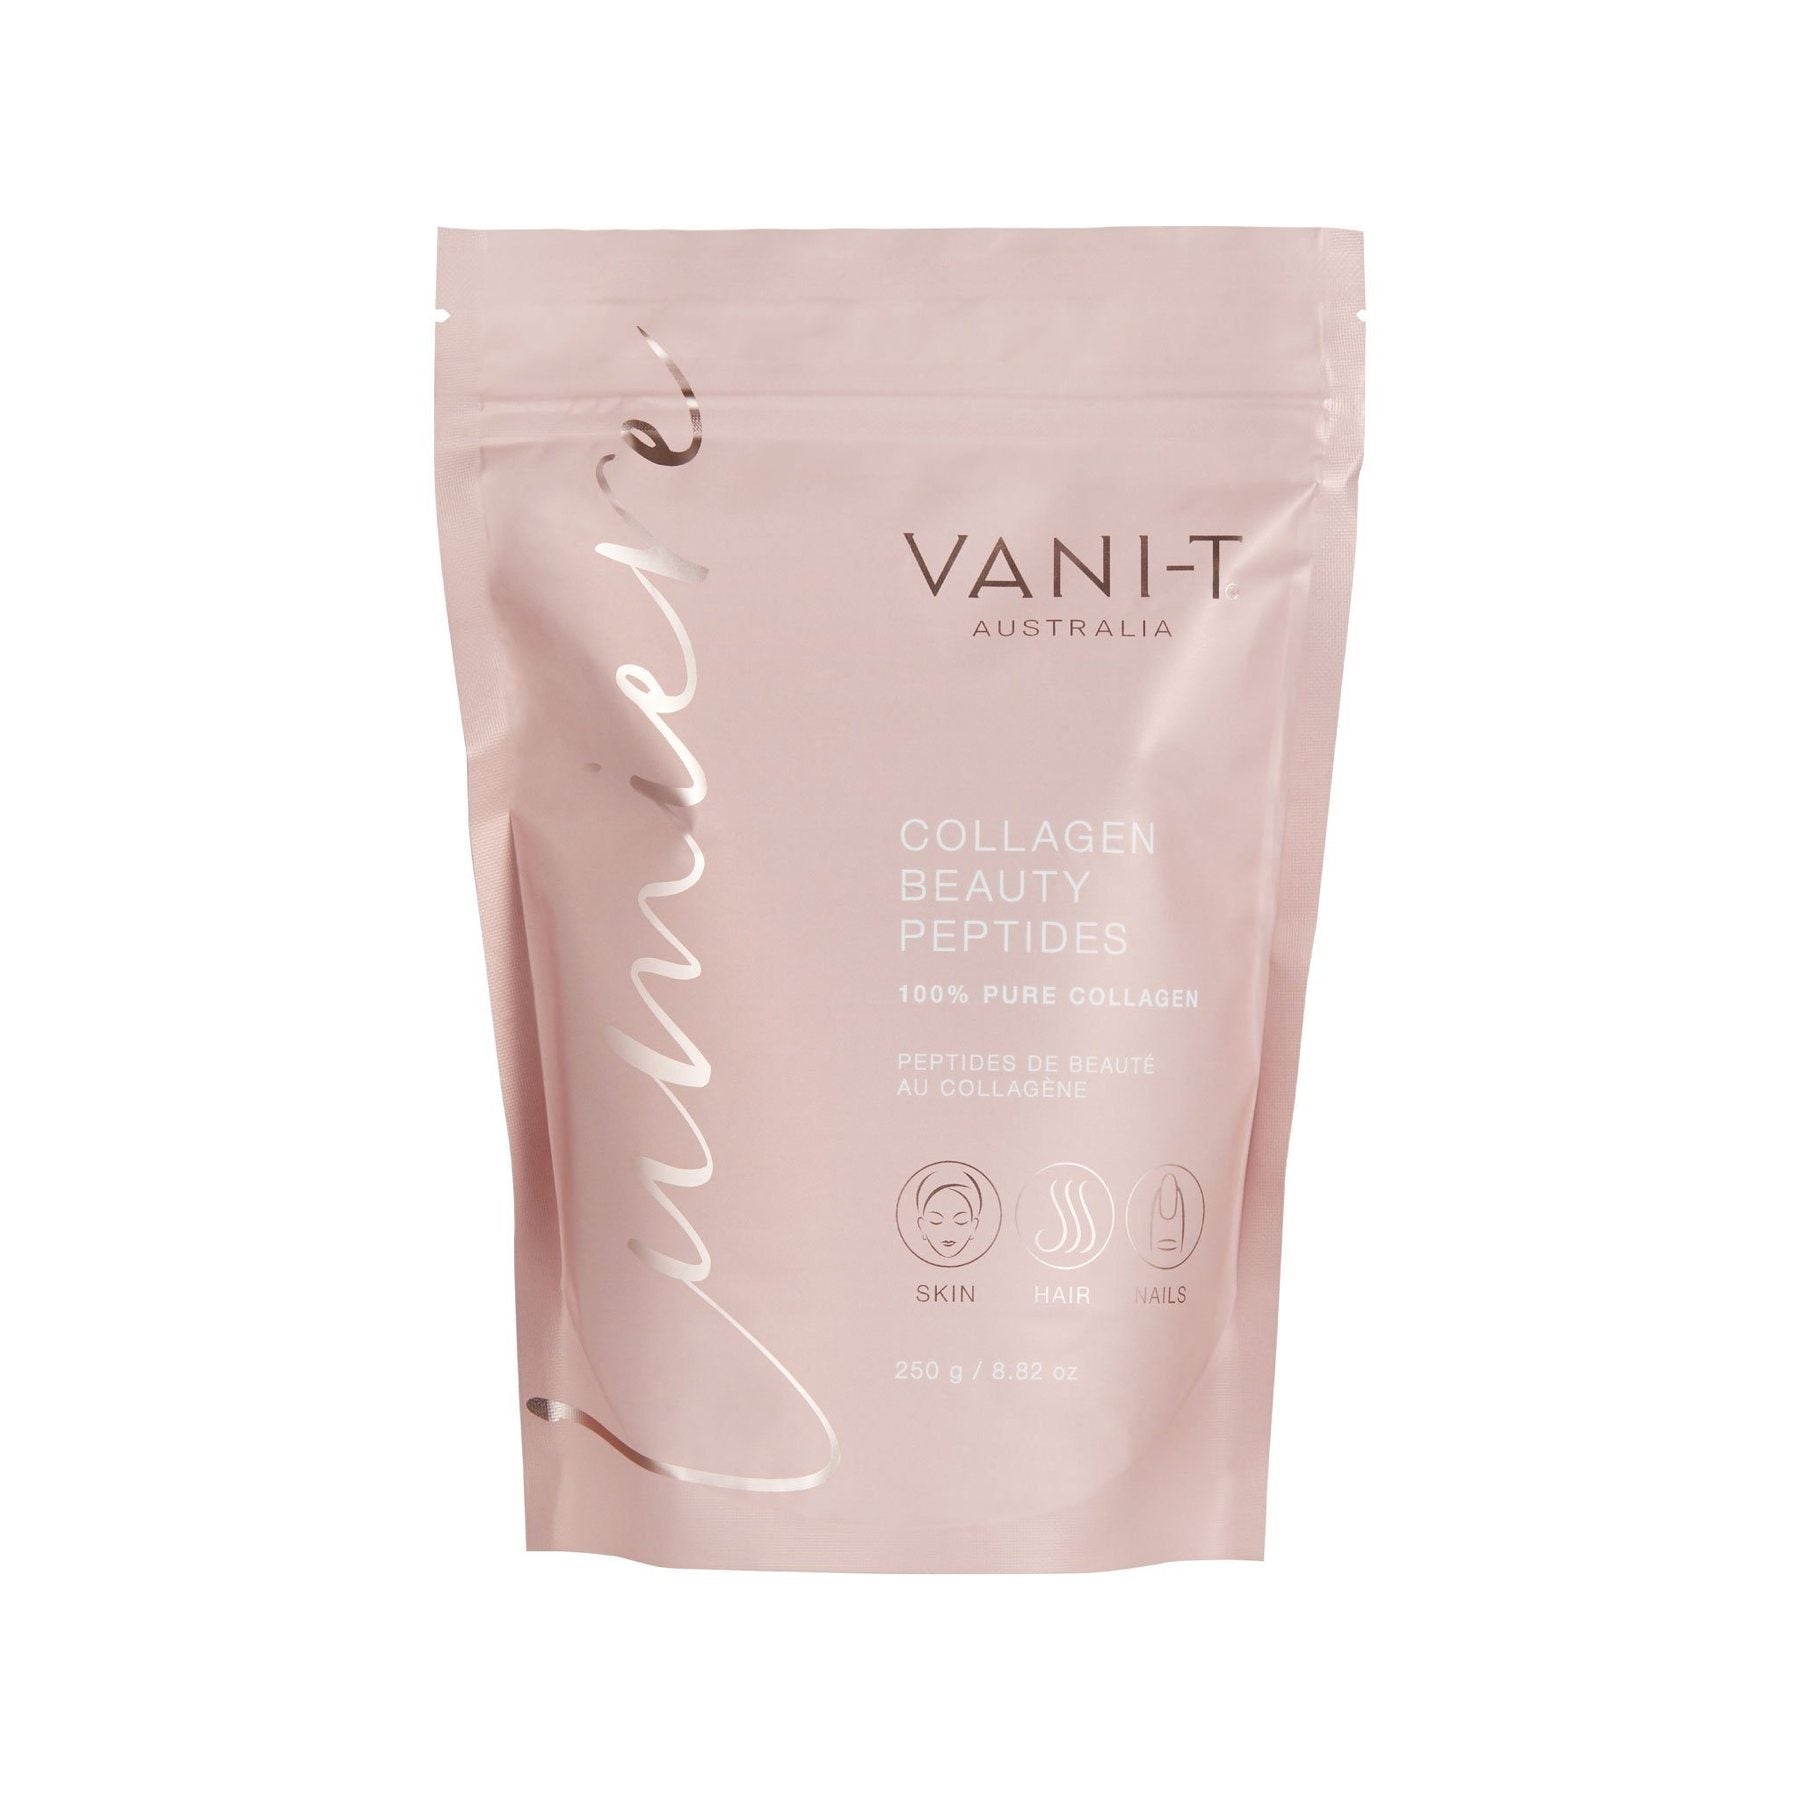 Lumiere Collagen Beauty Peptides Skin - Vani-T - Luxe Pacifique